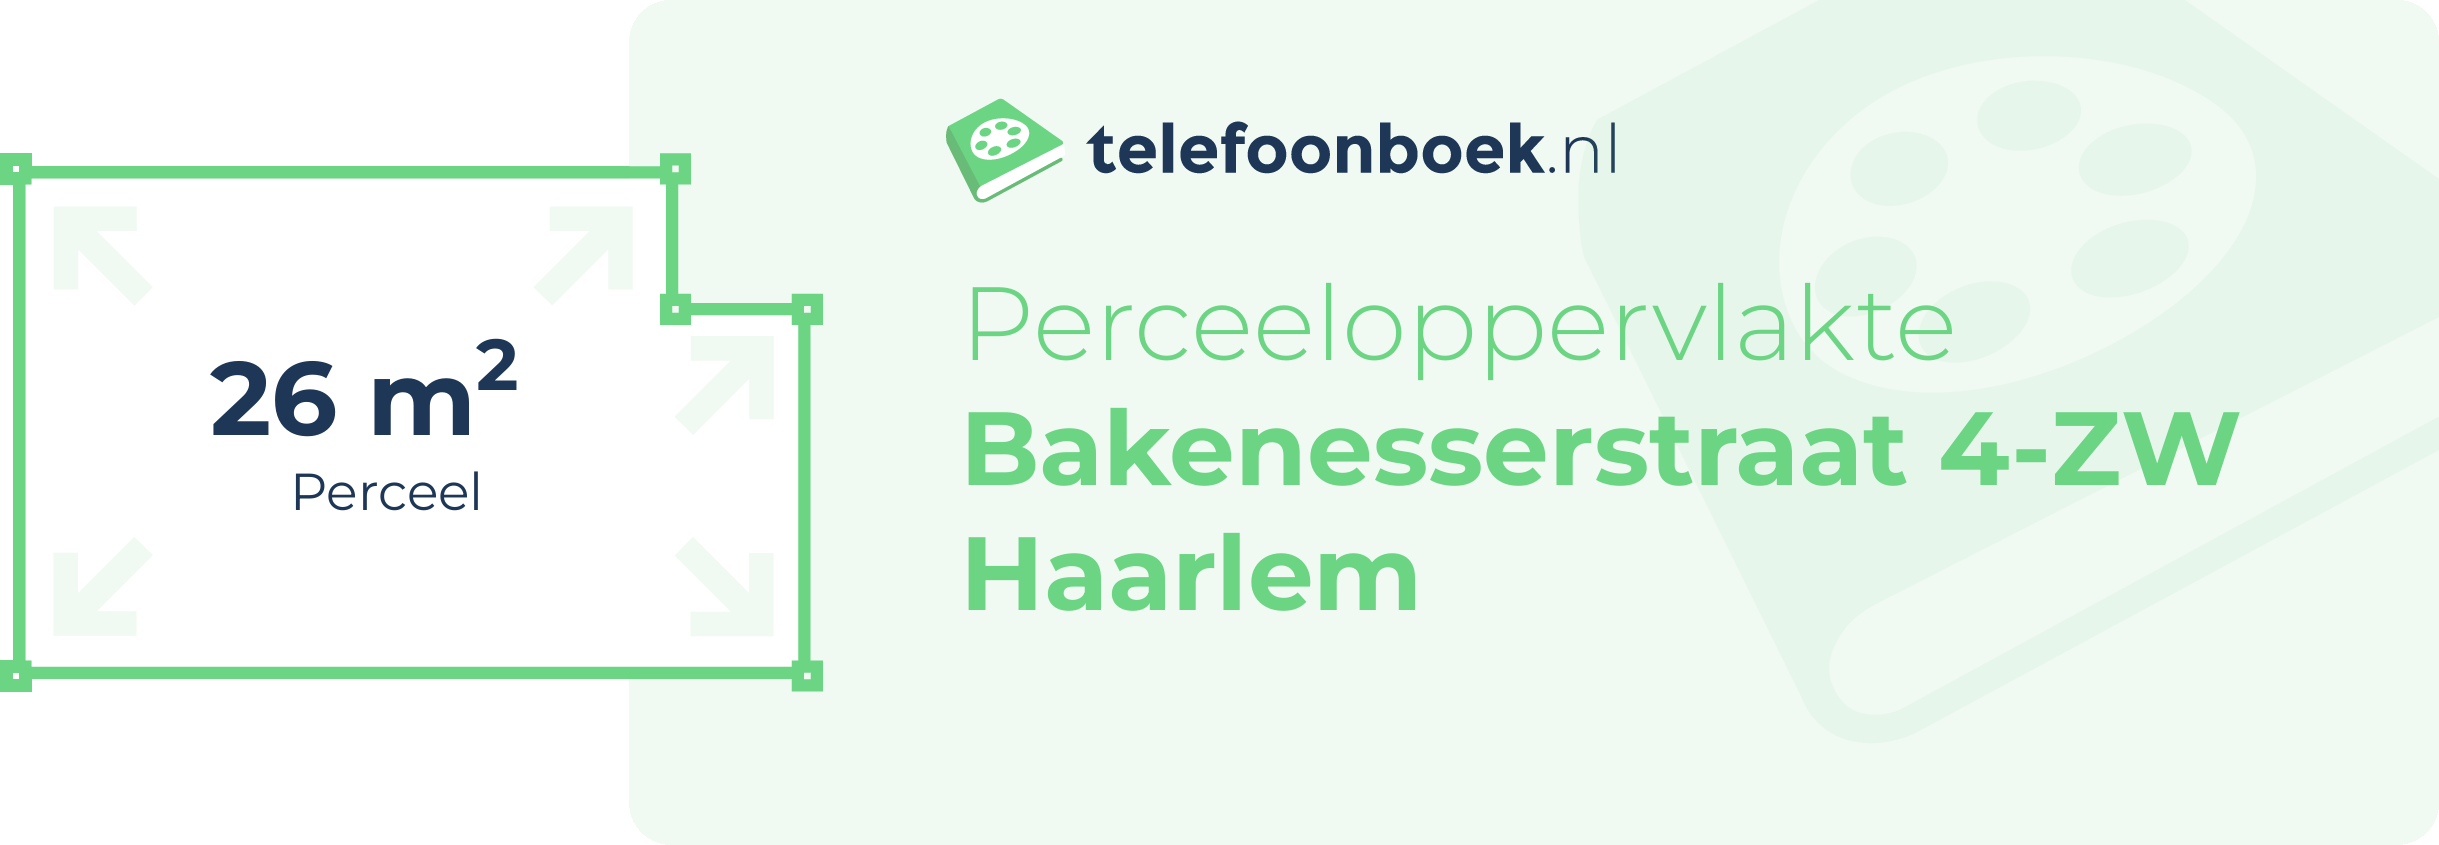 Perceeloppervlakte Bakenesserstraat 4-ZW Haarlem